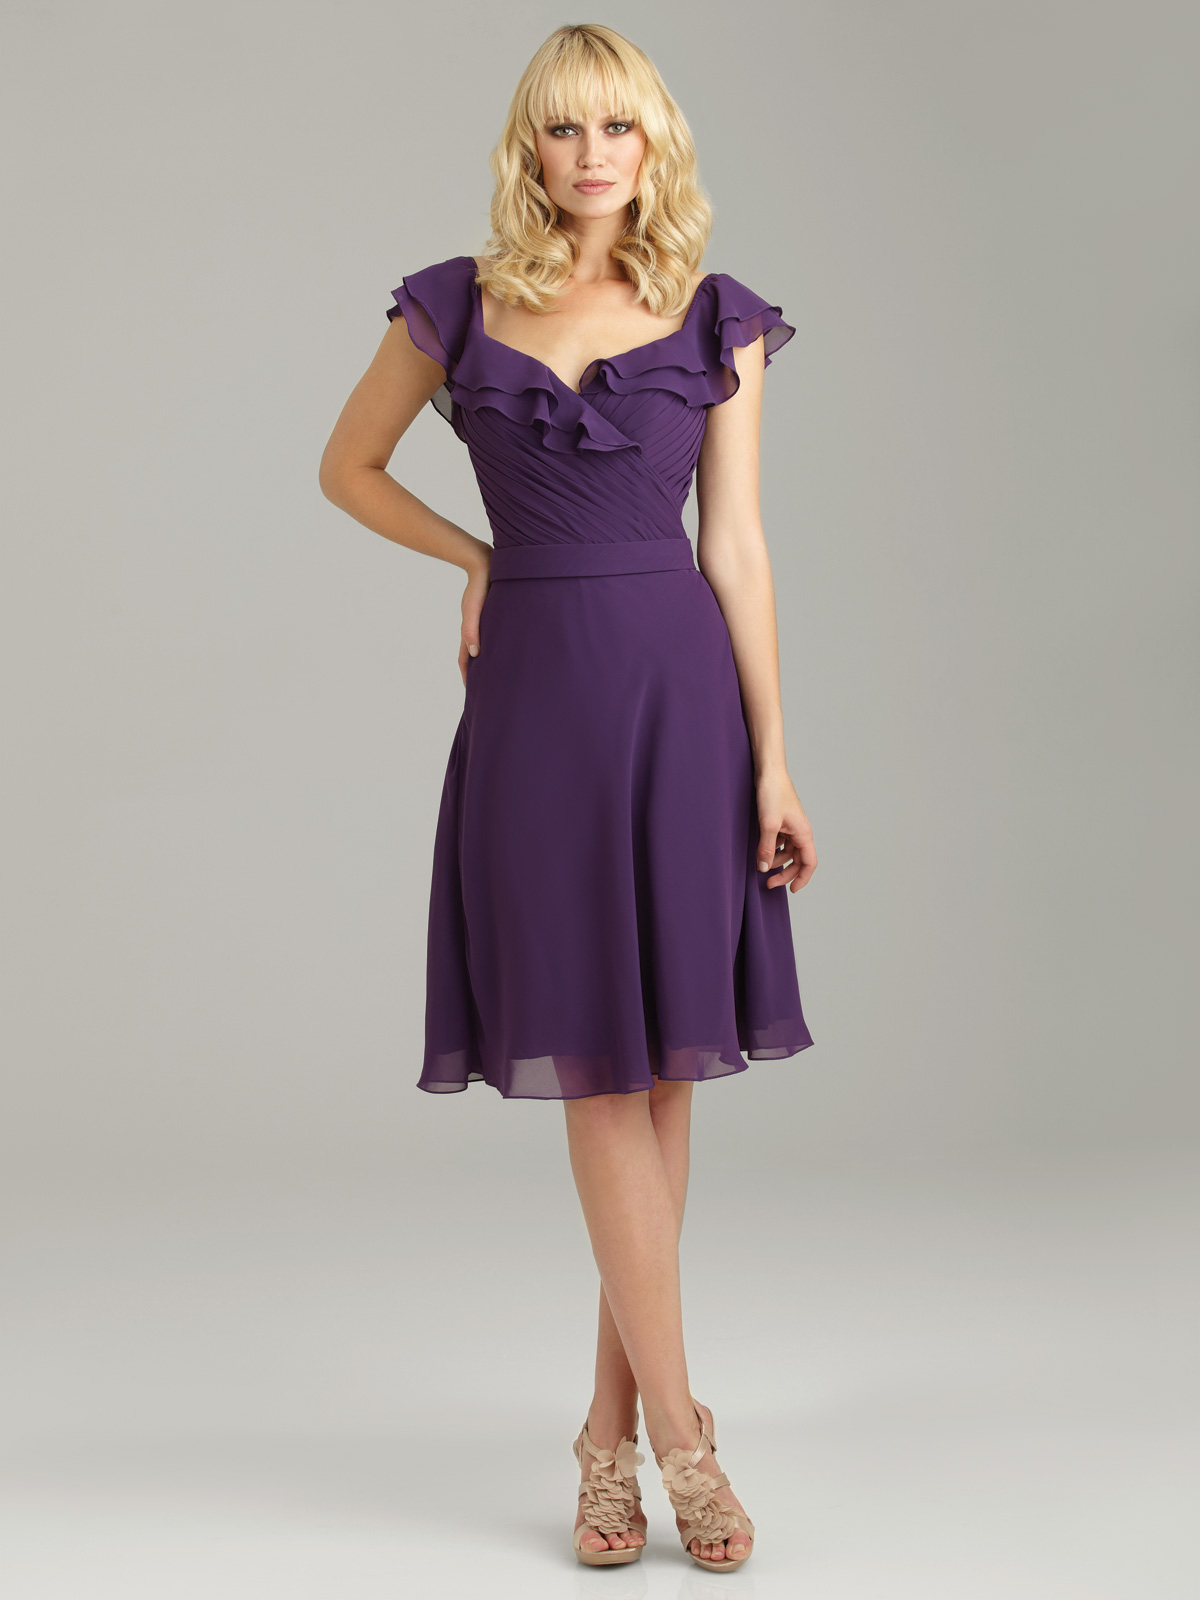 short purple bridesmaid dress 